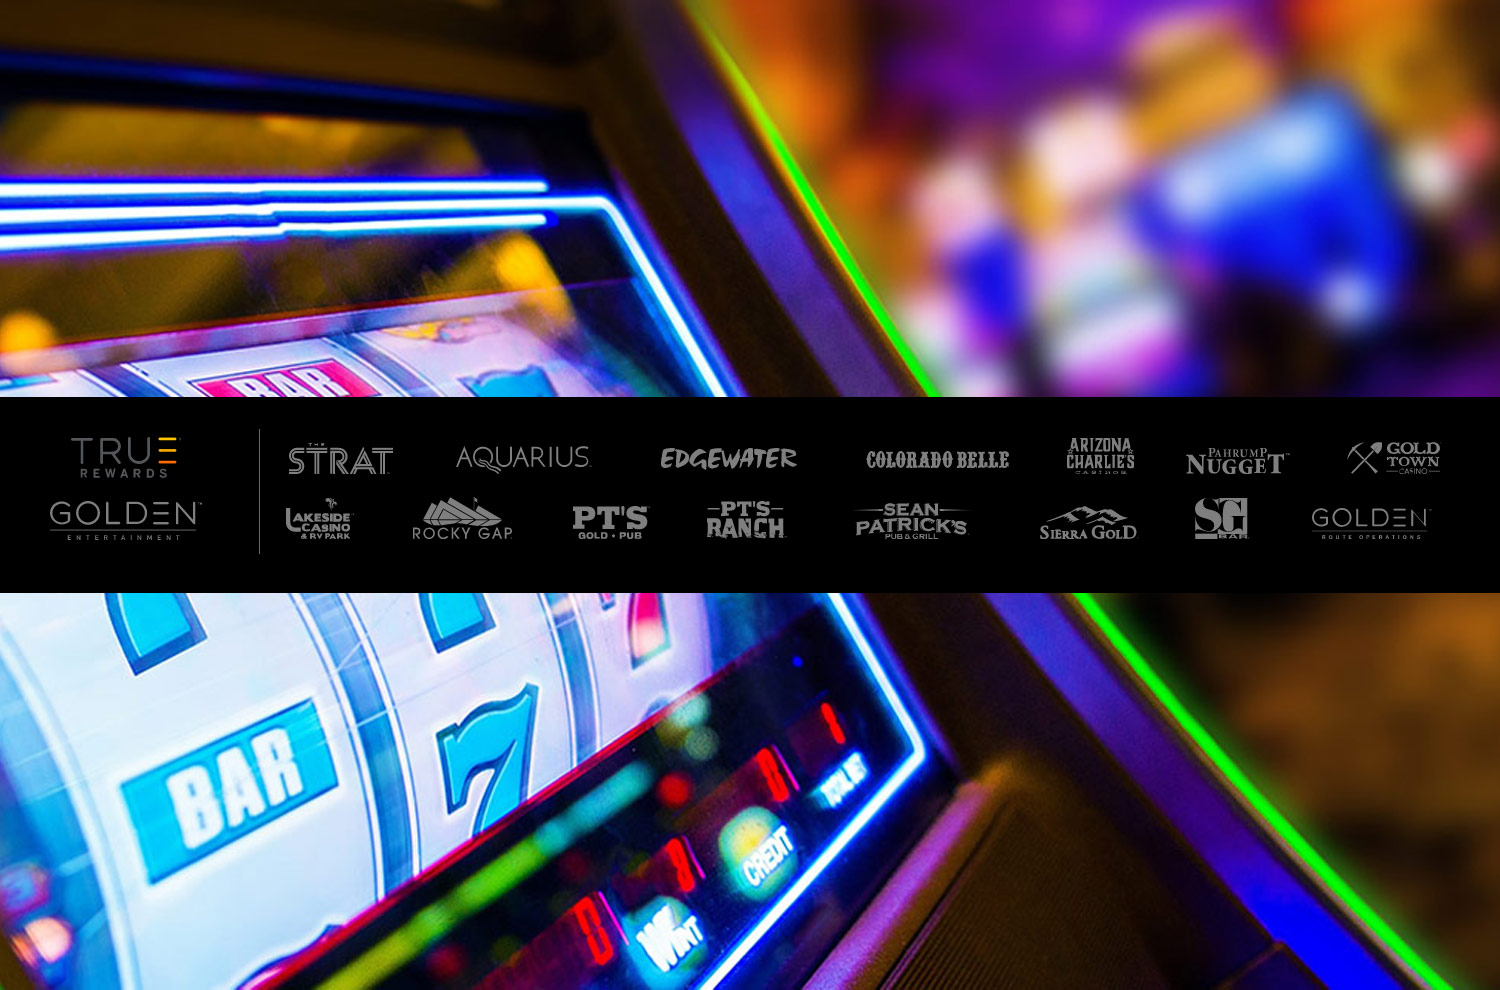 Slot machine with Golden Entertainment logos